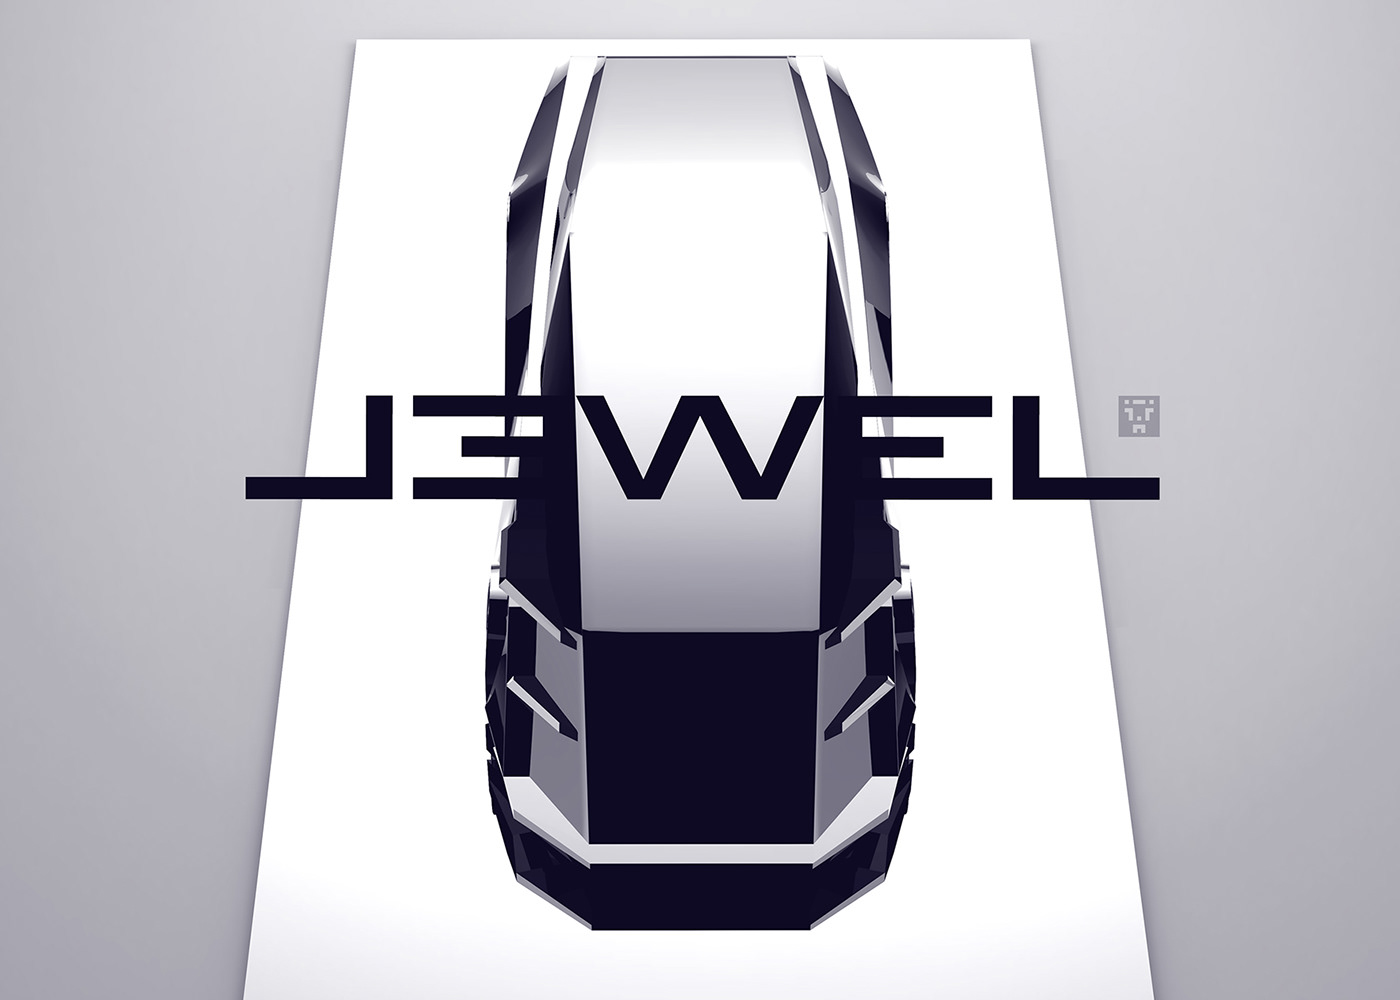 supercar car Vehicle Transportation Design Auto concept car design concept design shape jewel